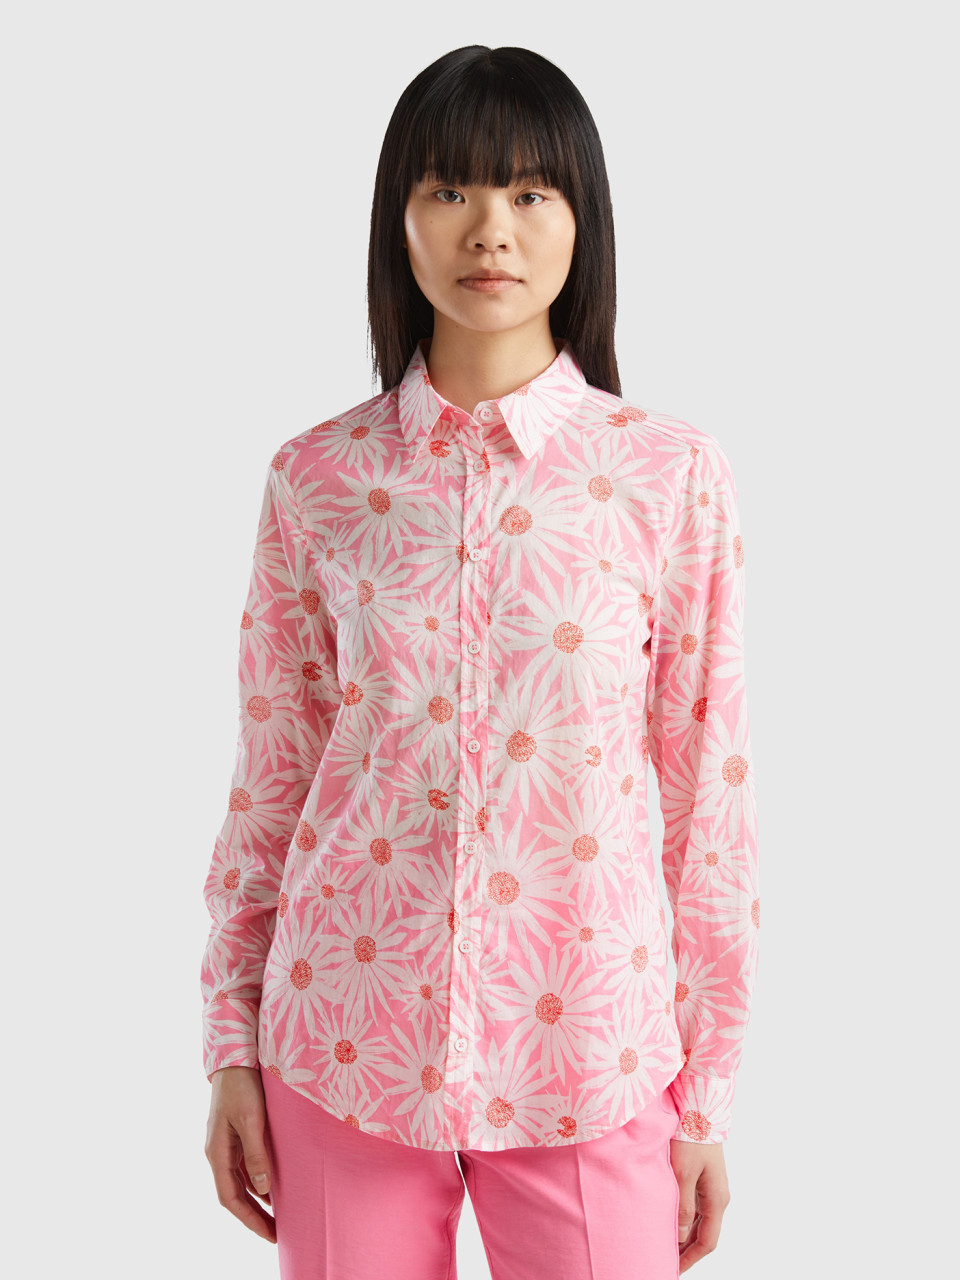 Benetton, 100% Cotton Patterned Shirt, Pink, Women